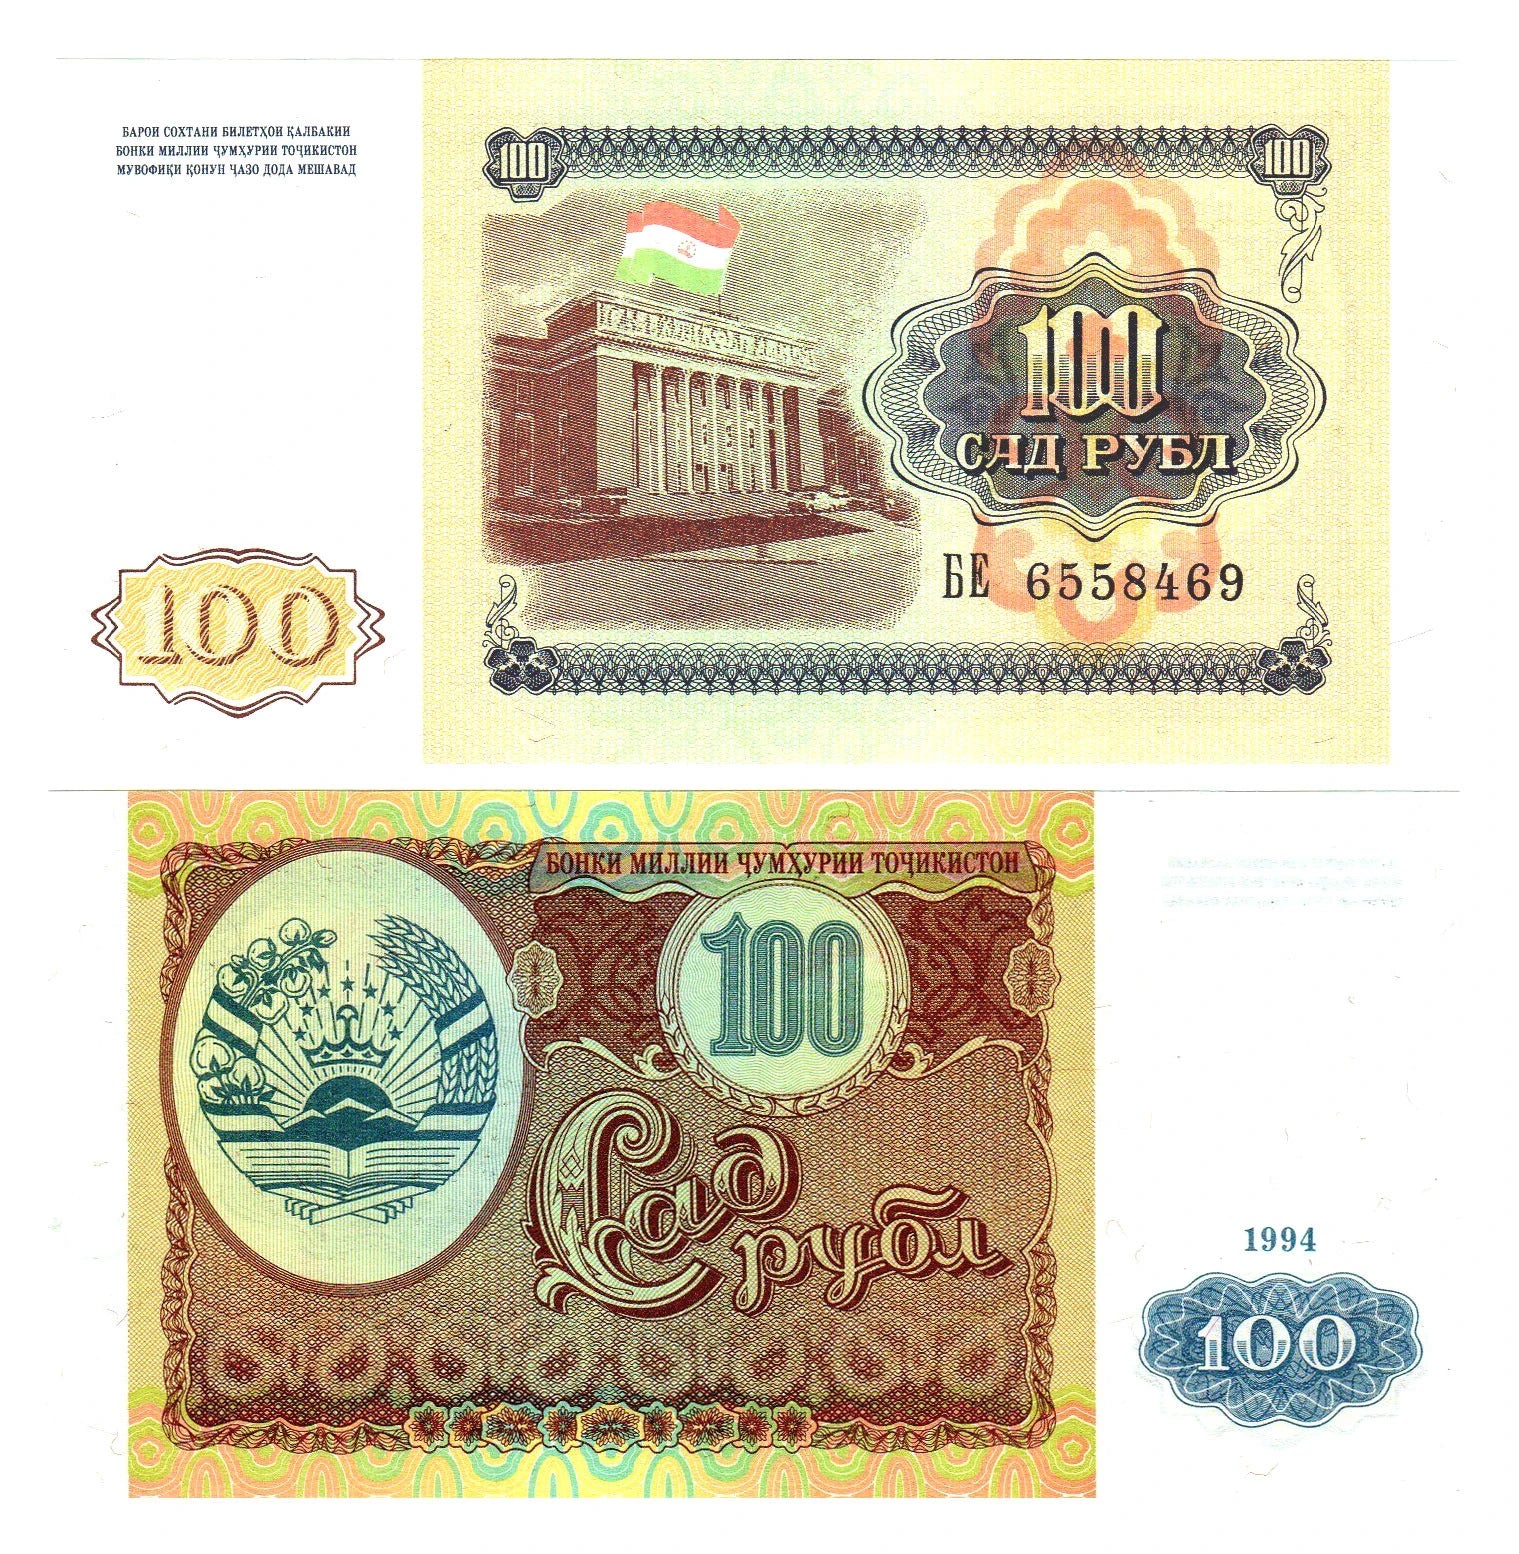 TADSCHIKISTAN | 100 RUBEL BANKNOTE UNC